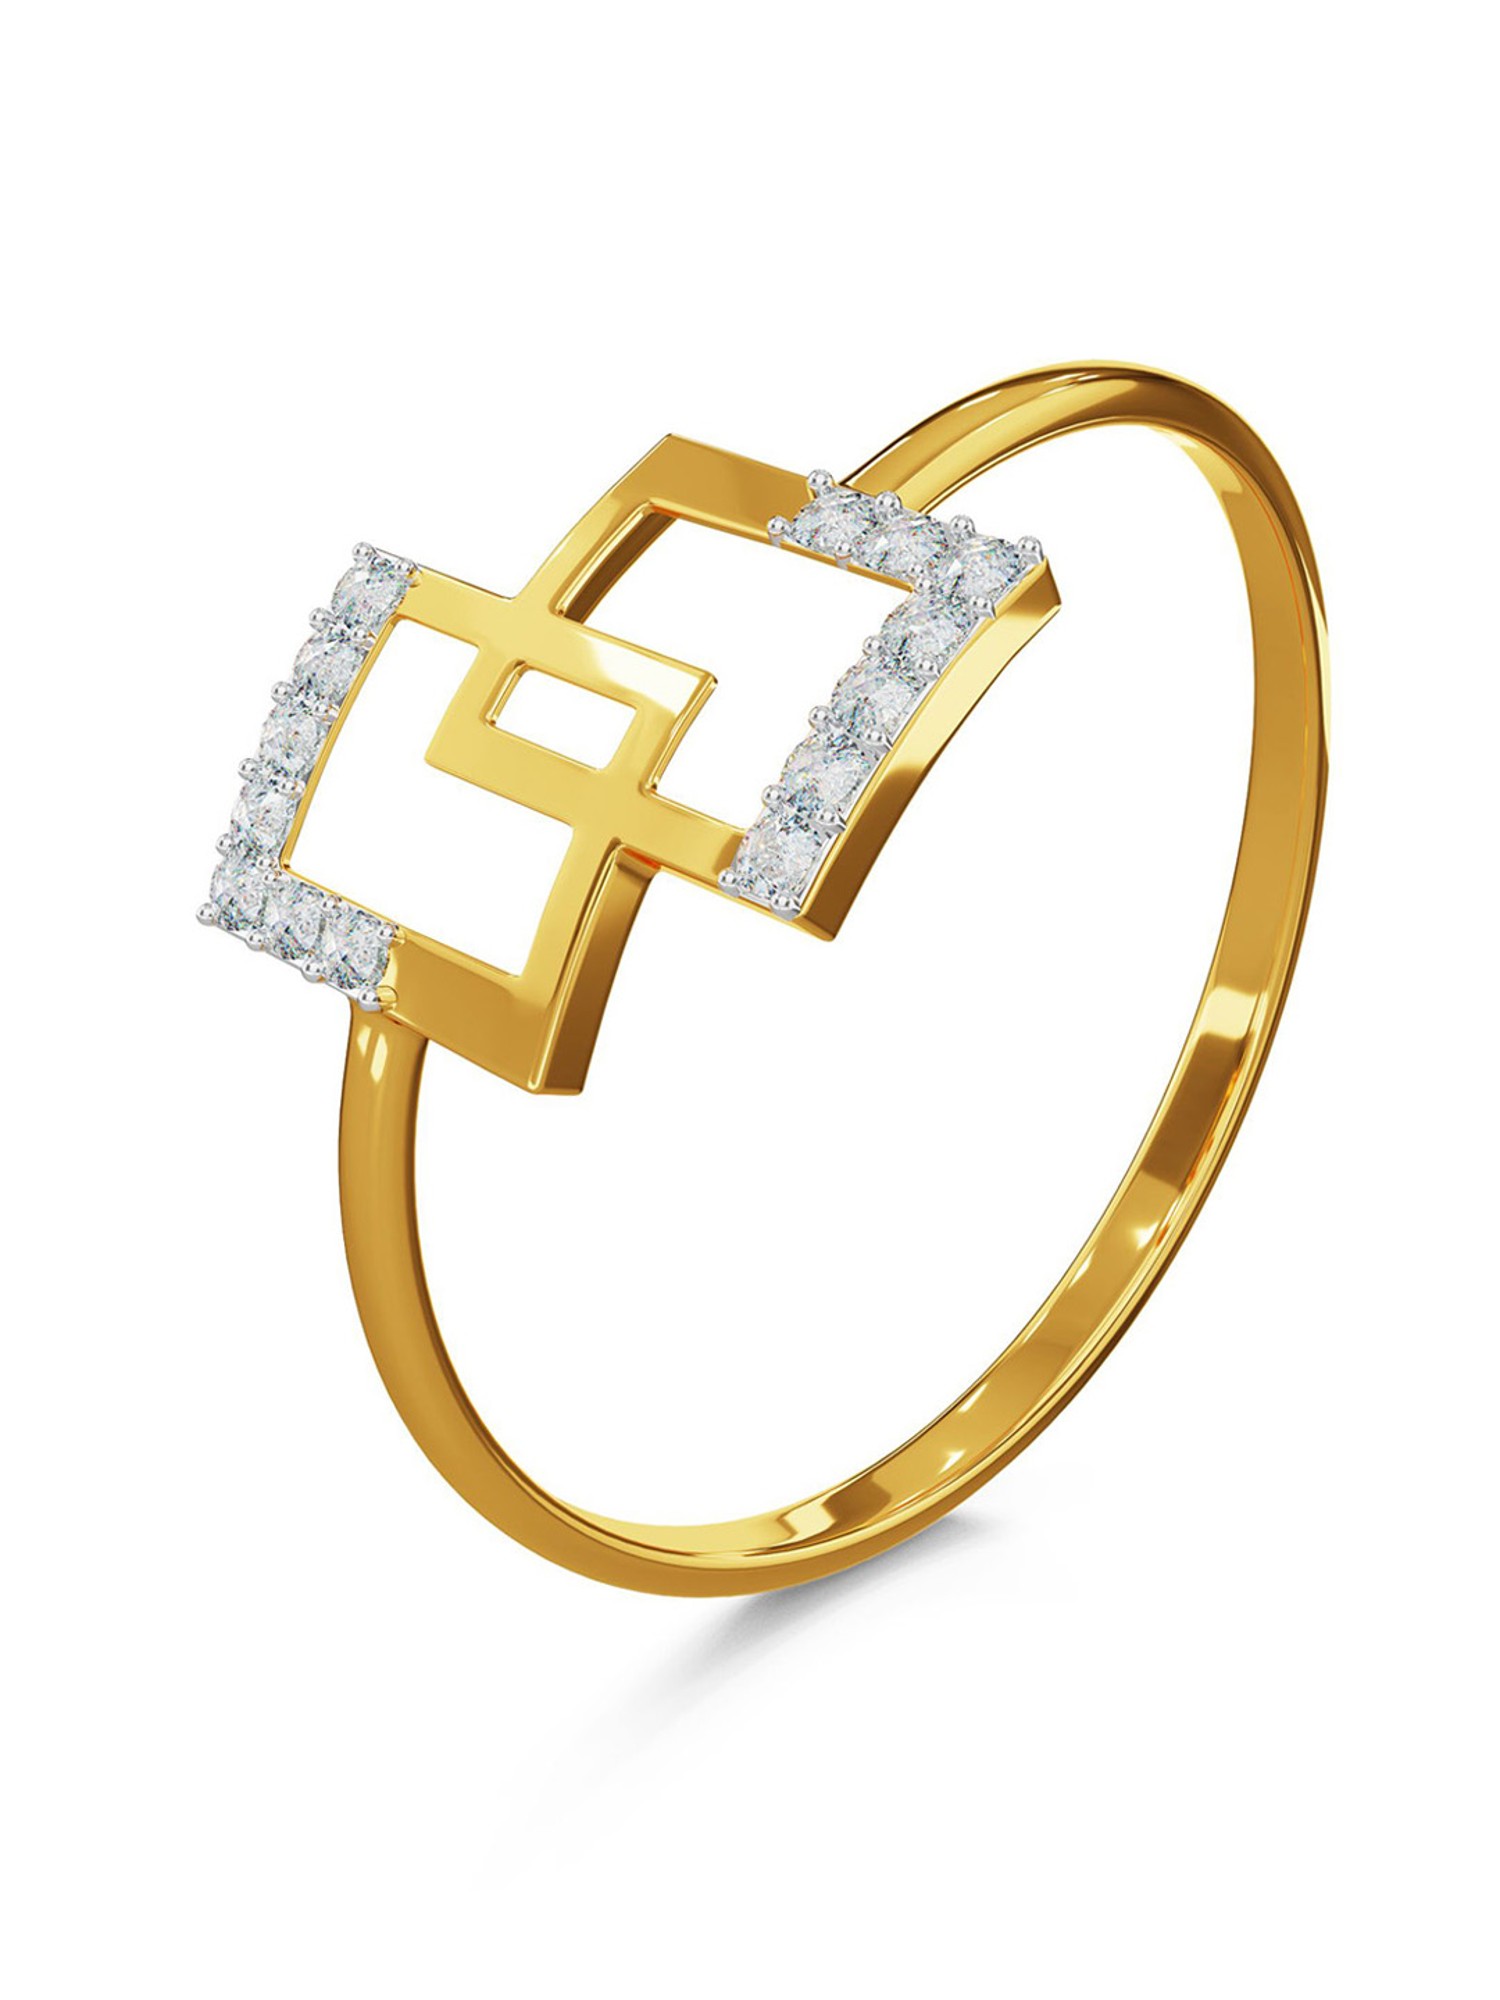 Malabar light weight Cocktail ring designs | Malabar bridal gold rings |  Gold ring designs| Malabar - YouTube